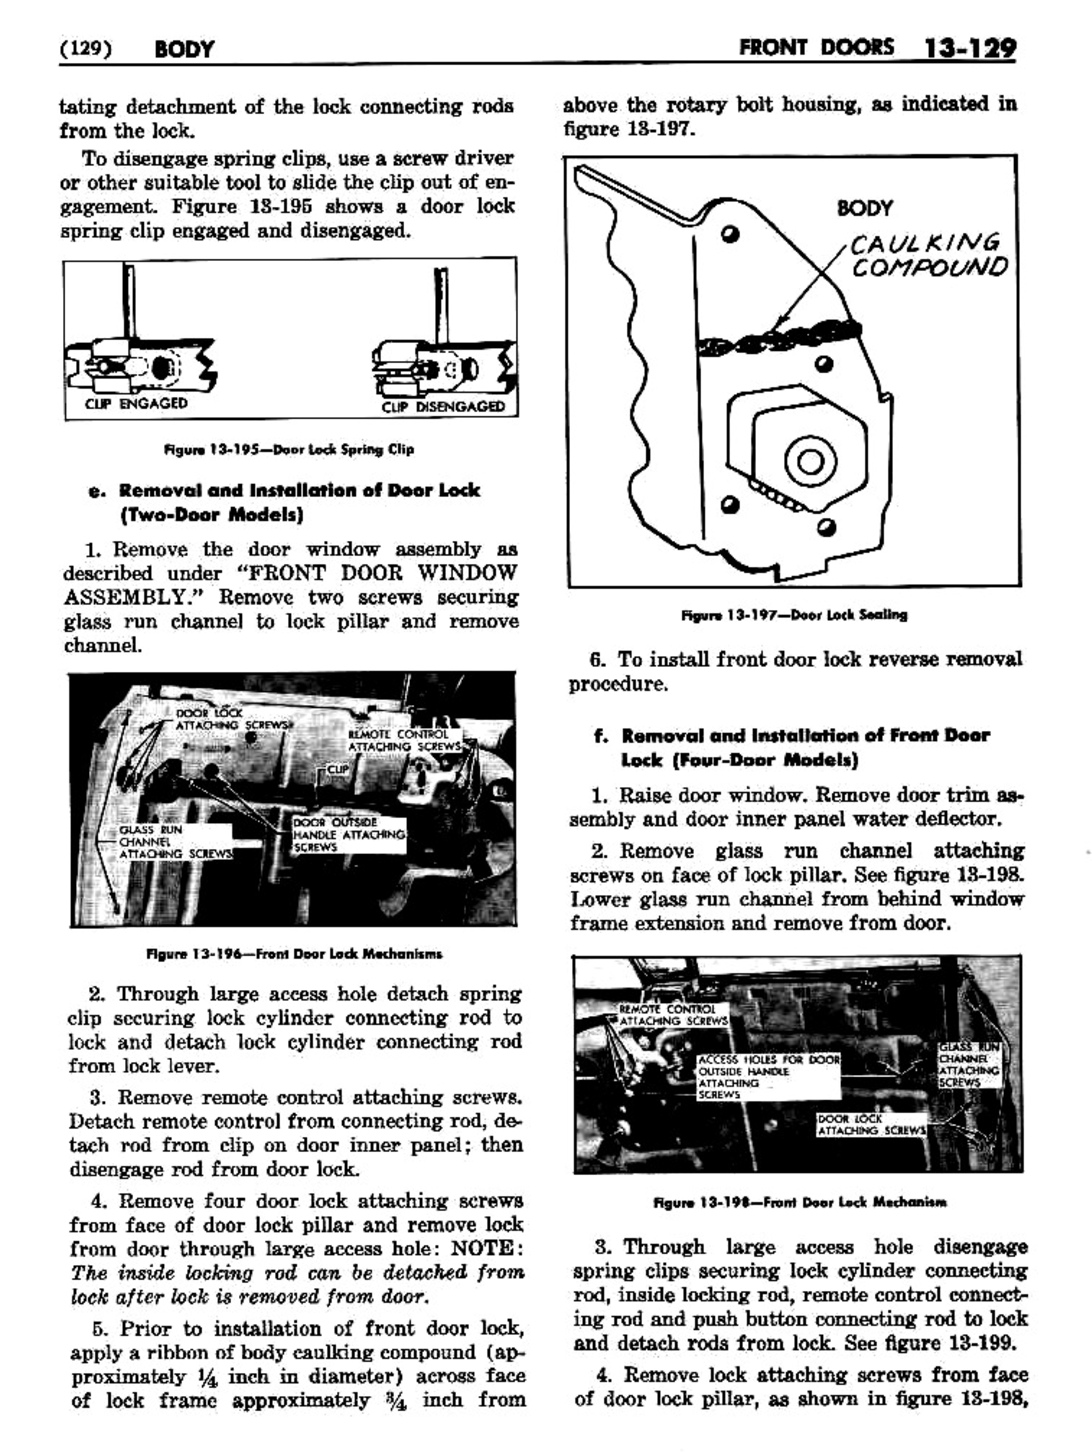 n_1957 Buick Body Service Manual-131-131.jpg